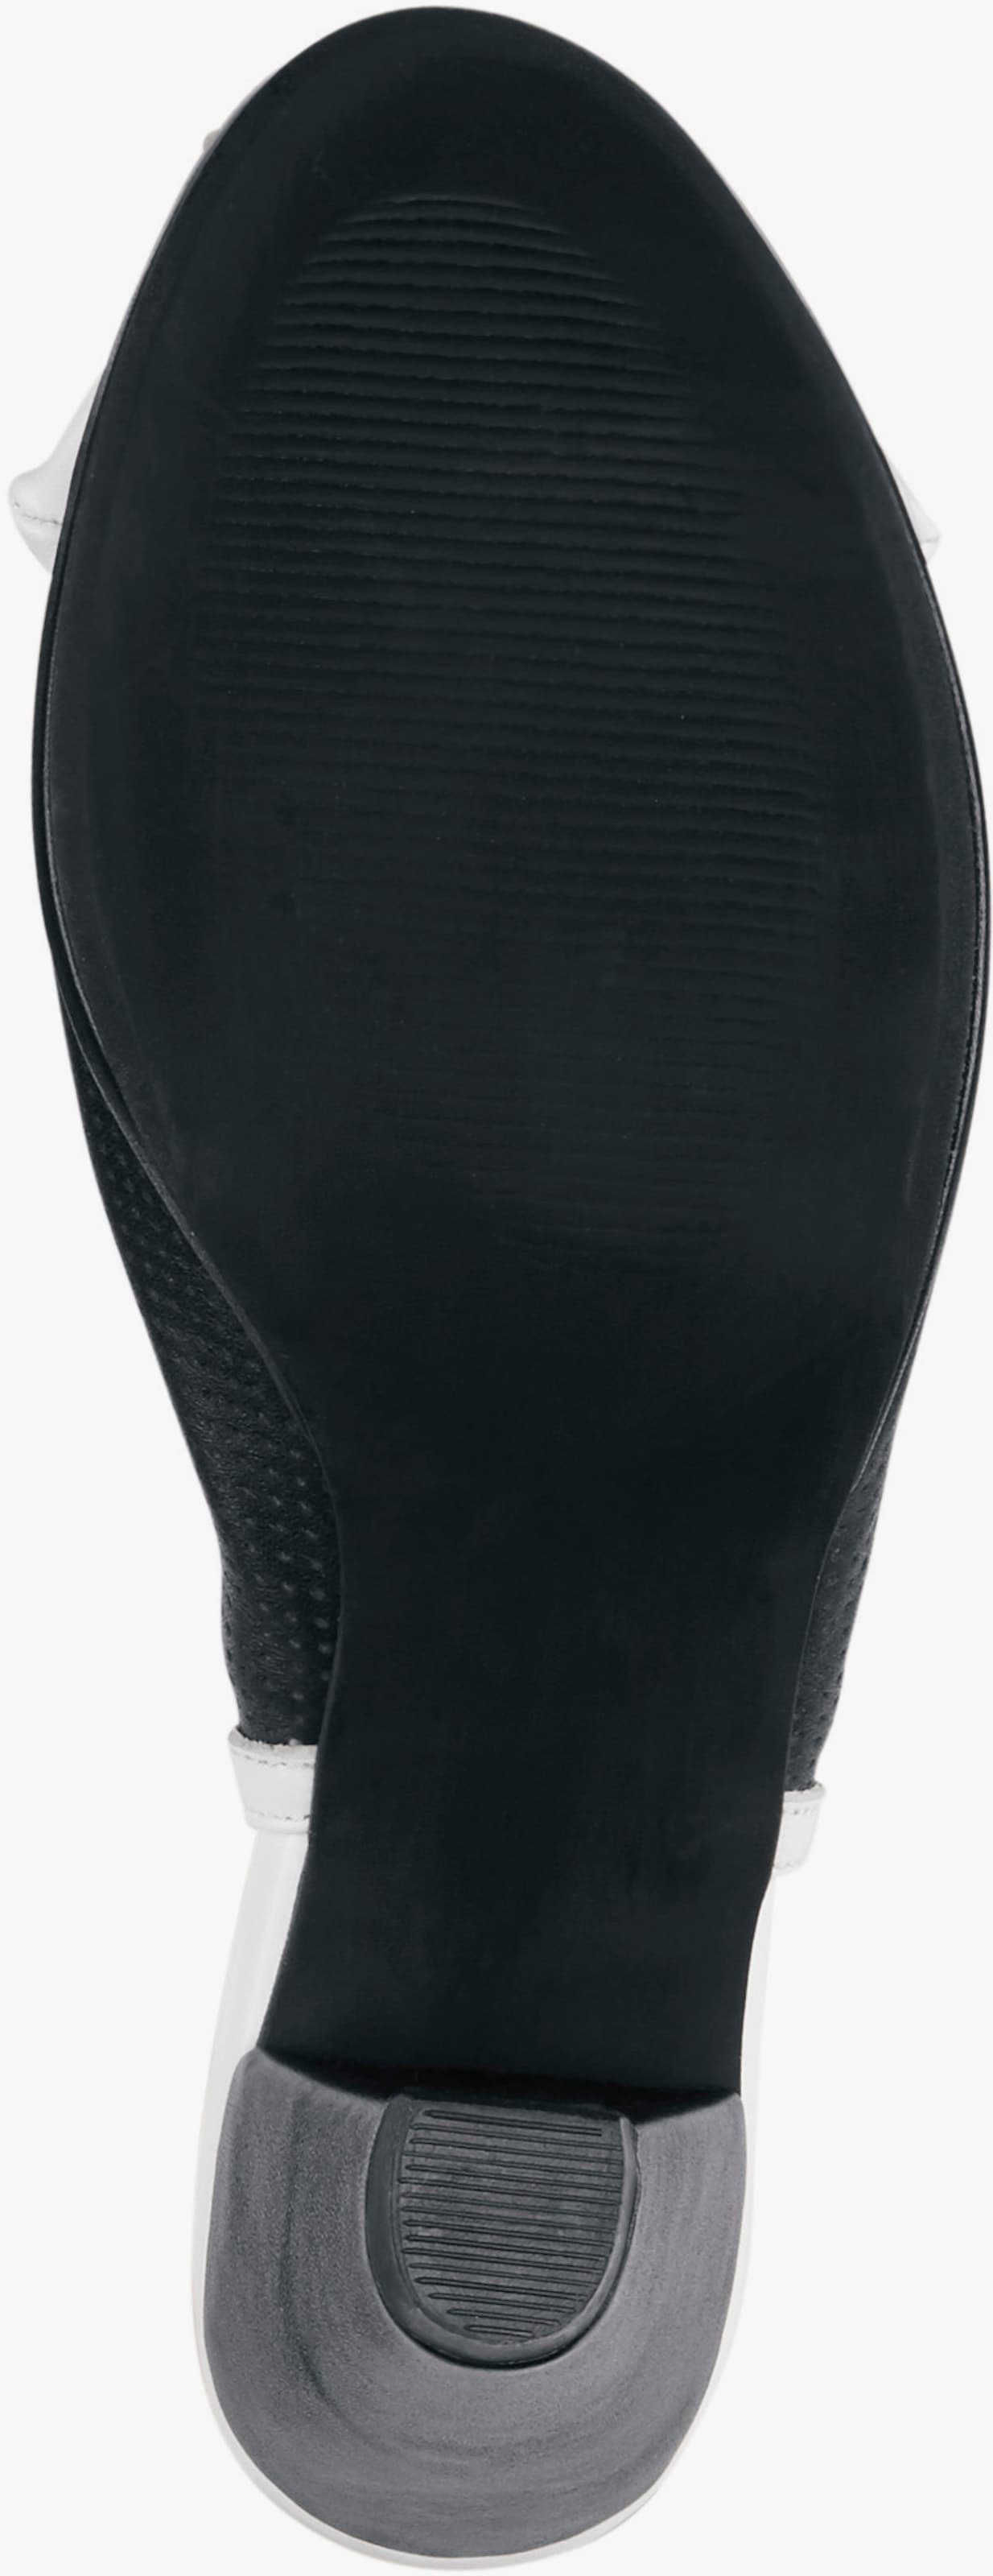 Andrea Conti sandaaltjes - zwart/wit